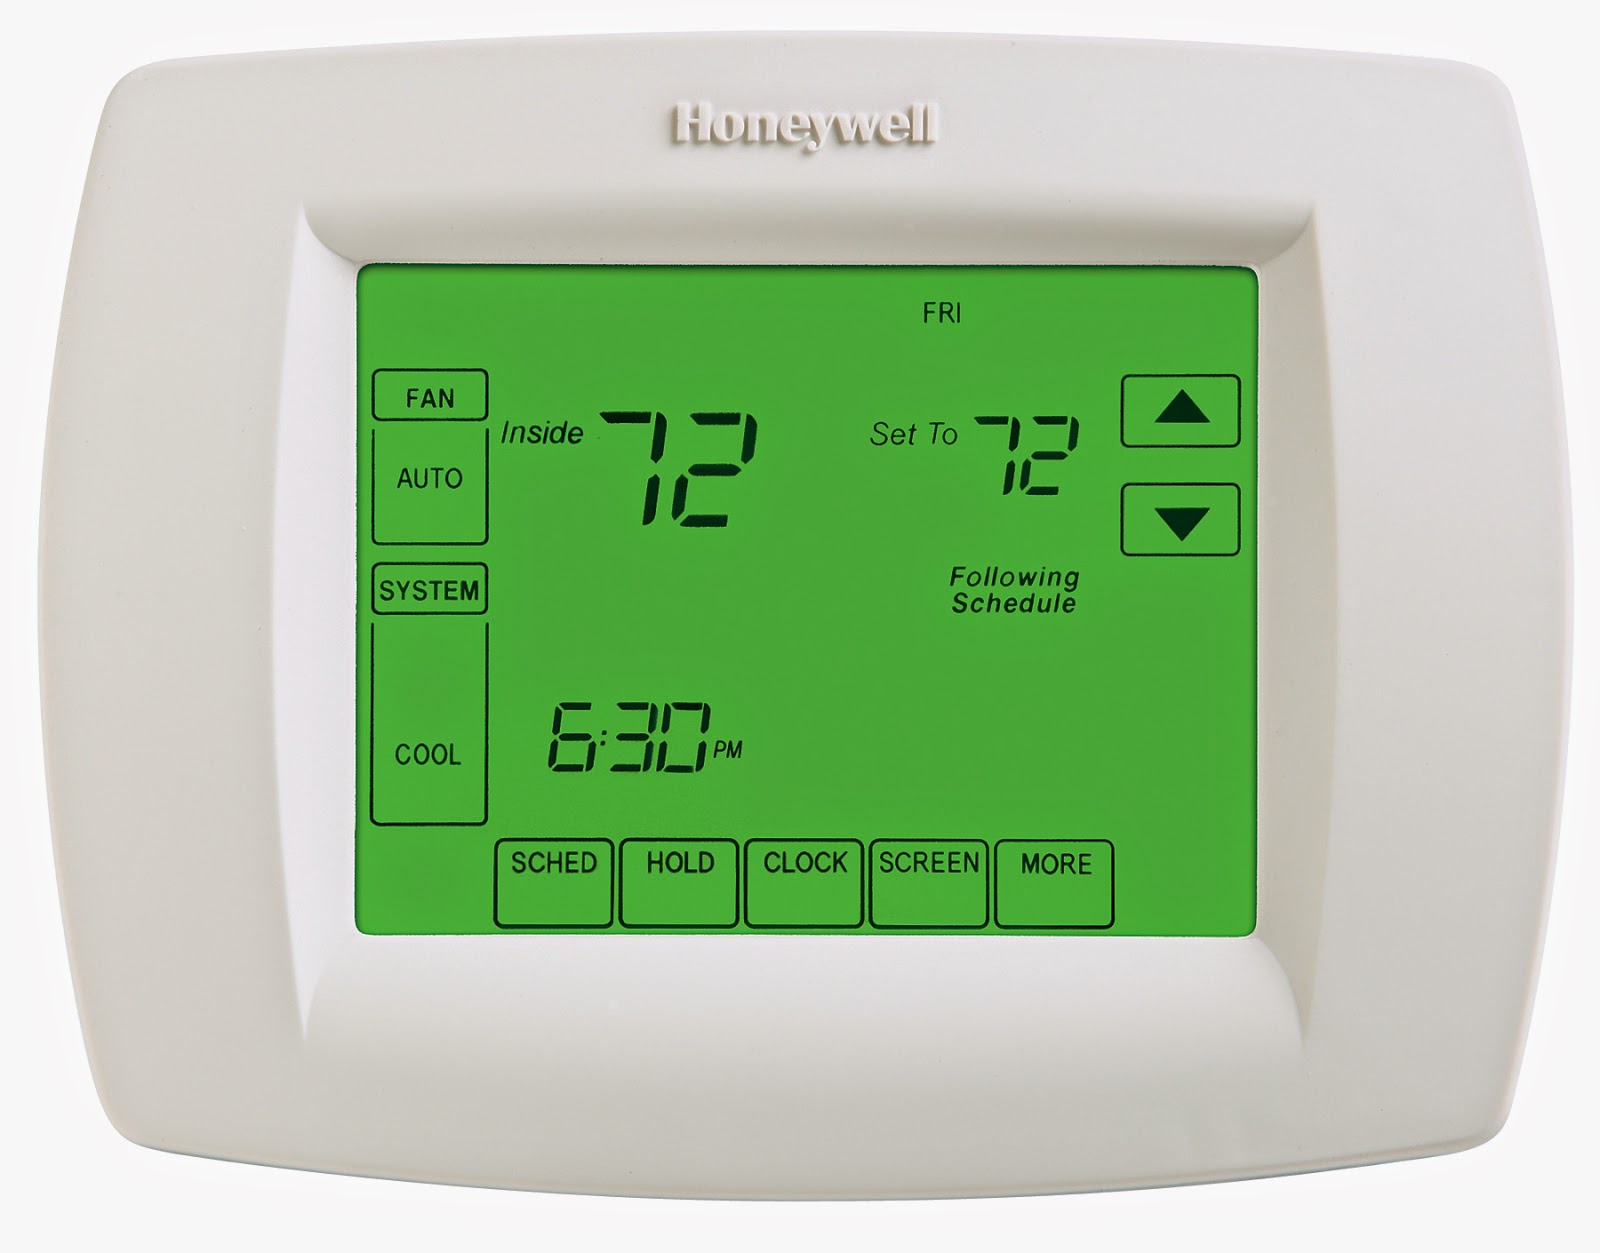 Honeywell tb8220u1003 visionpro 8000 programmable thermostat user manual